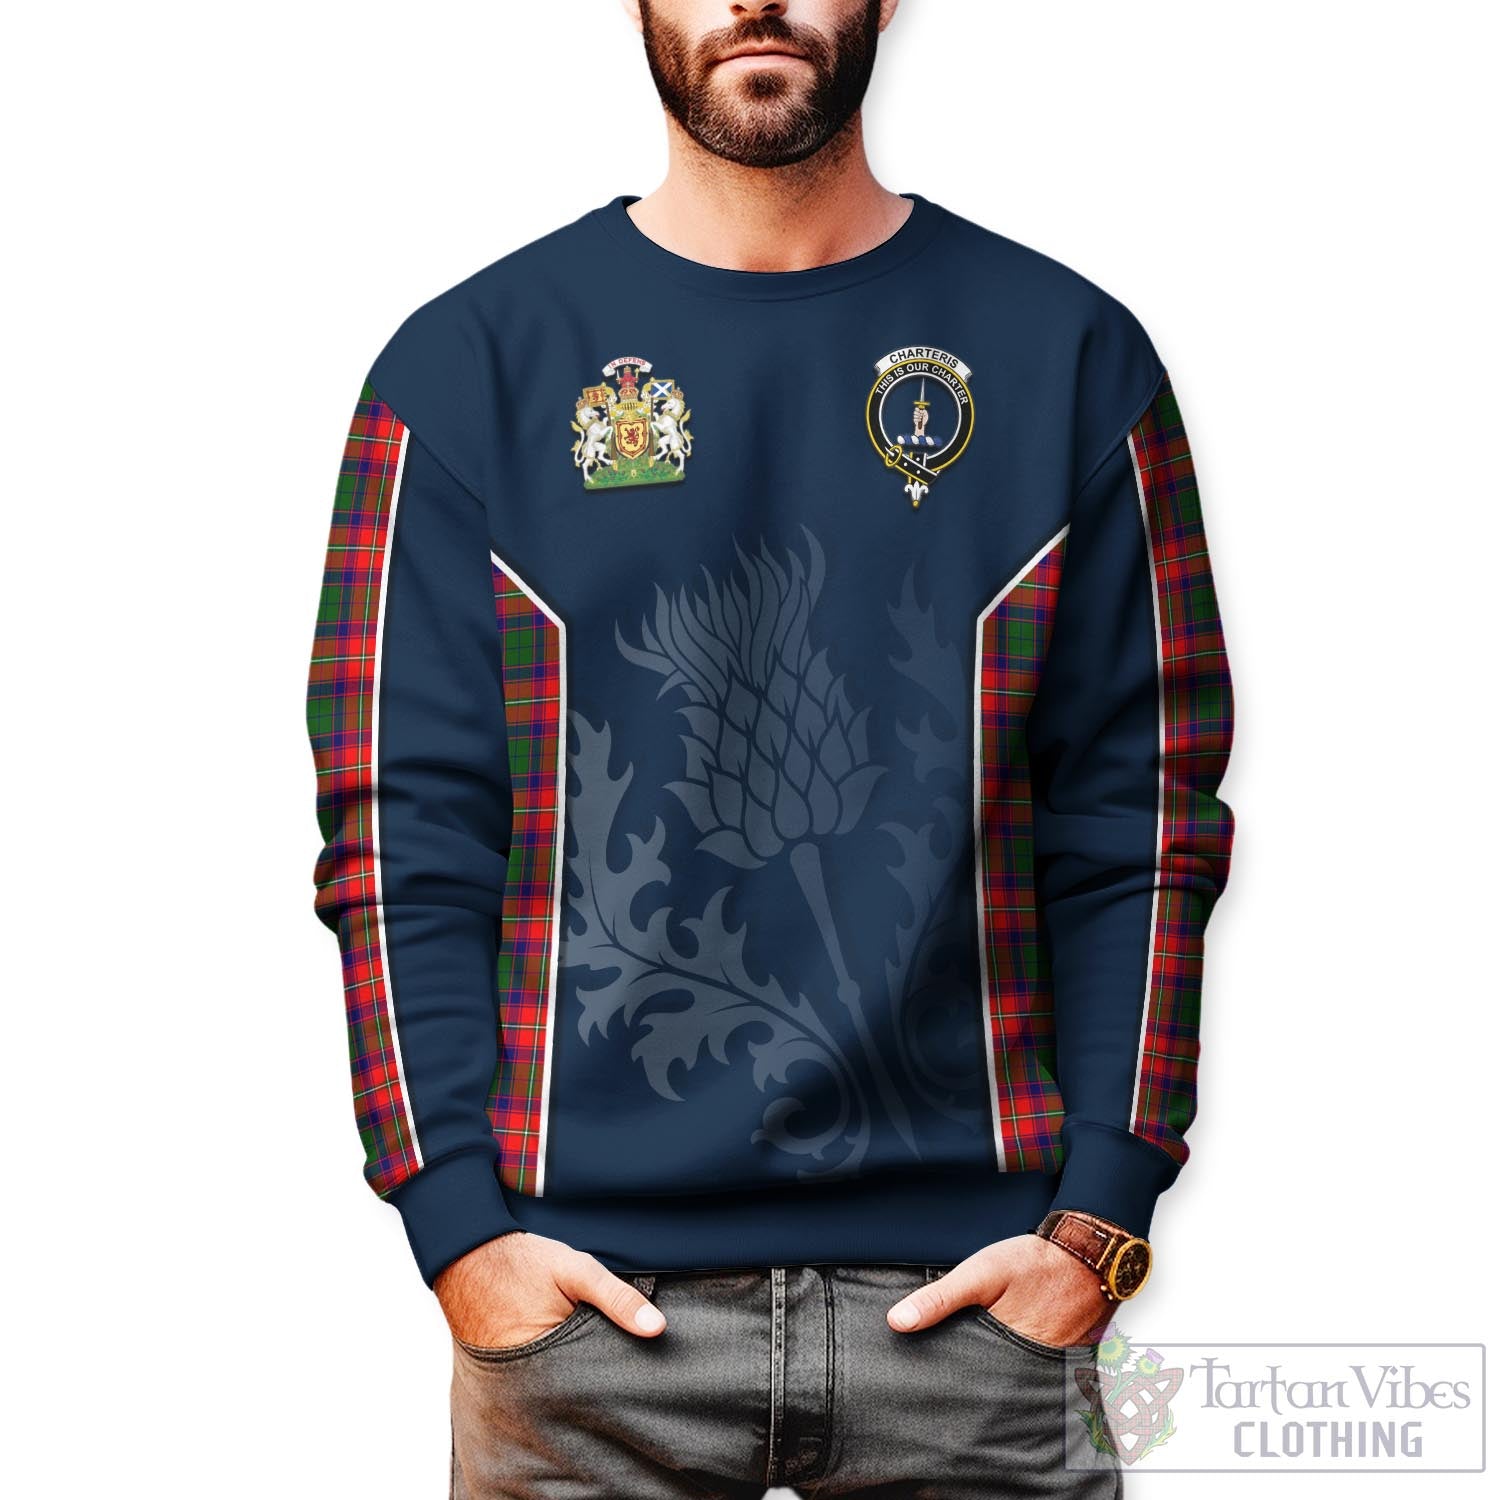 Tartan Vibes Clothing Charteris Tartan Sweatshirt with Family Crest and Scottish Thistle Vibes Sport Style